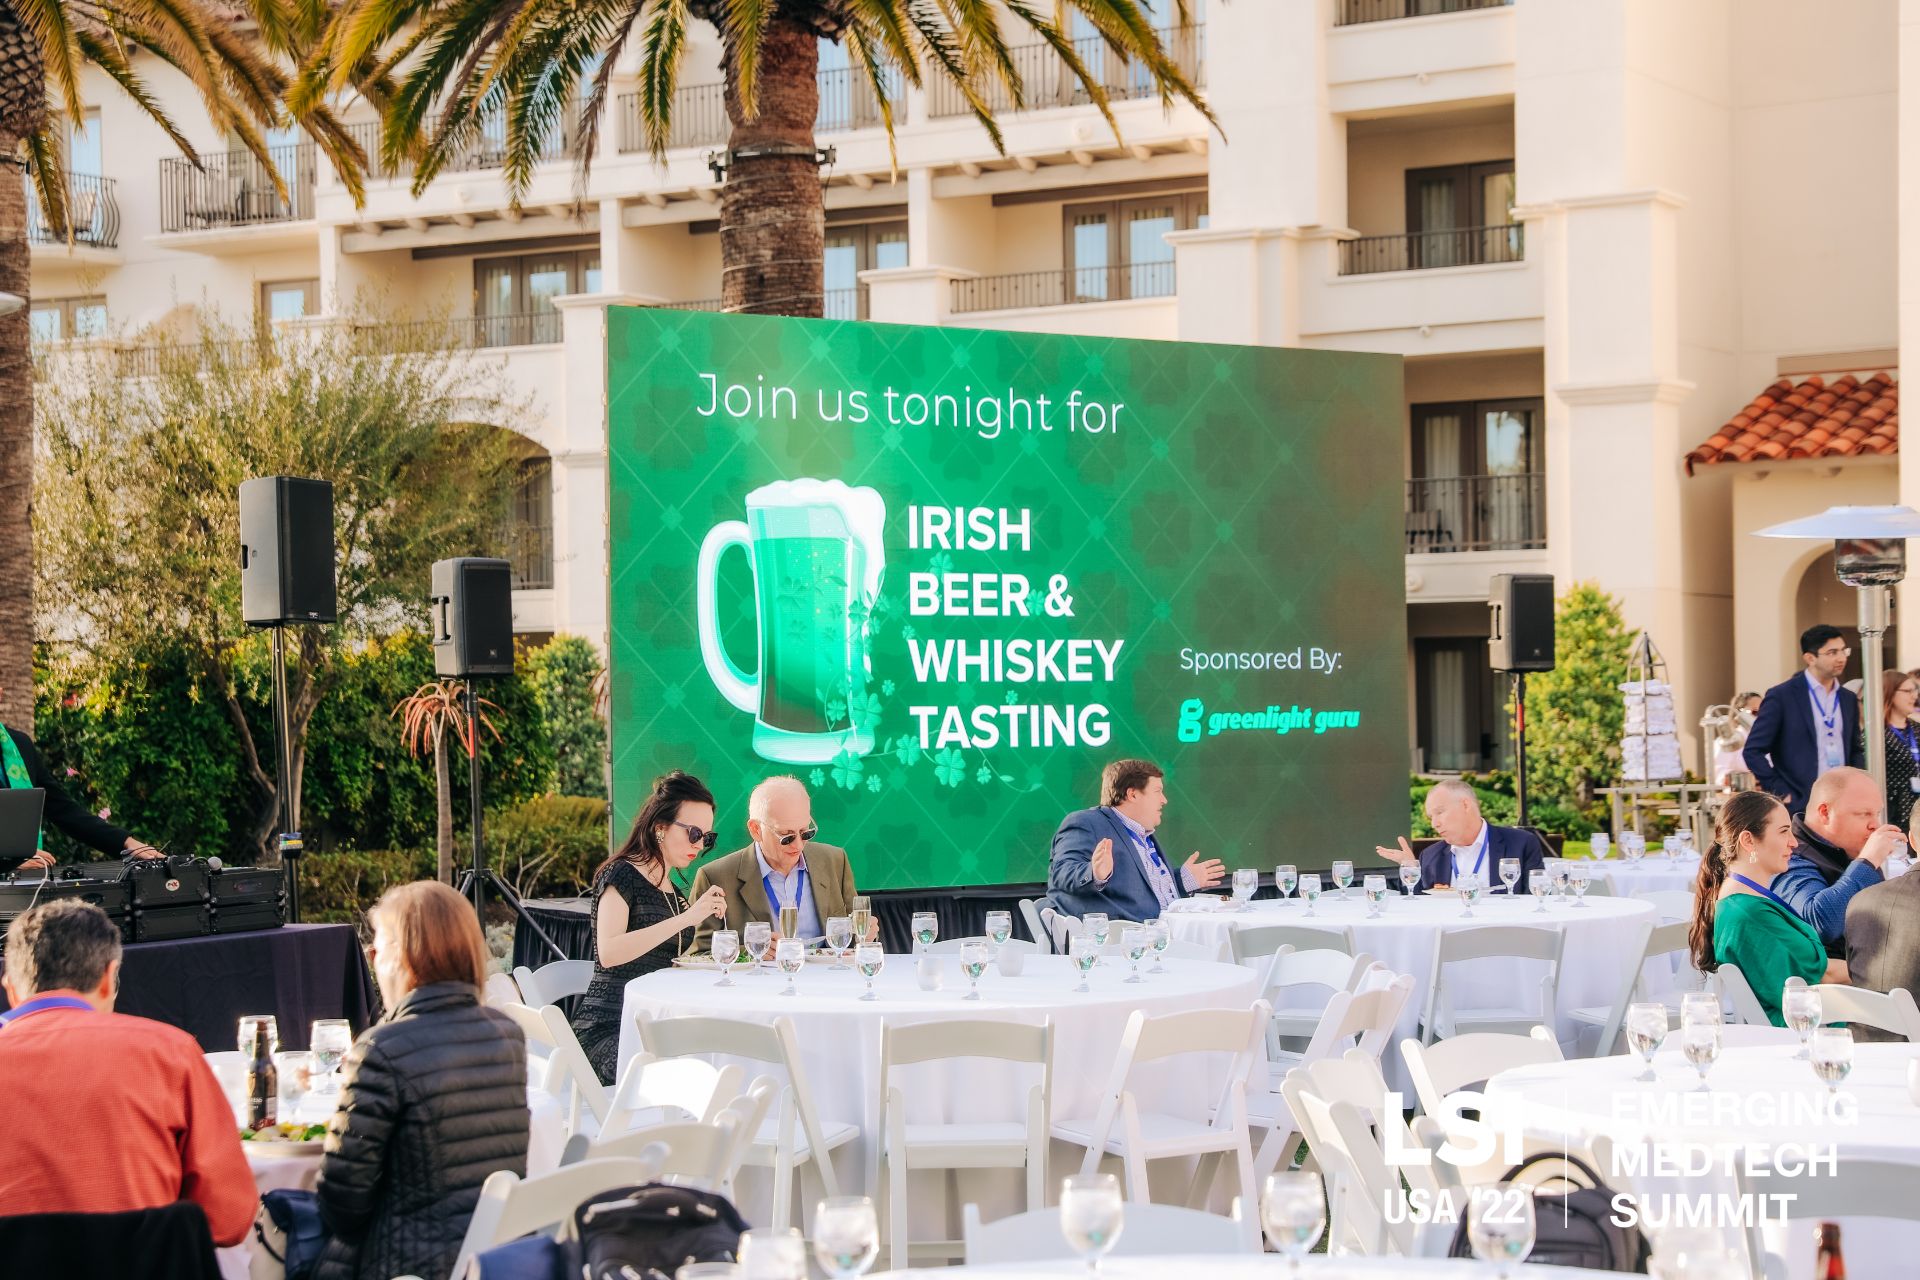 St. Patrick's Day Irish Beer & Whiskey Tasting Sponsored by Greenlight Guru